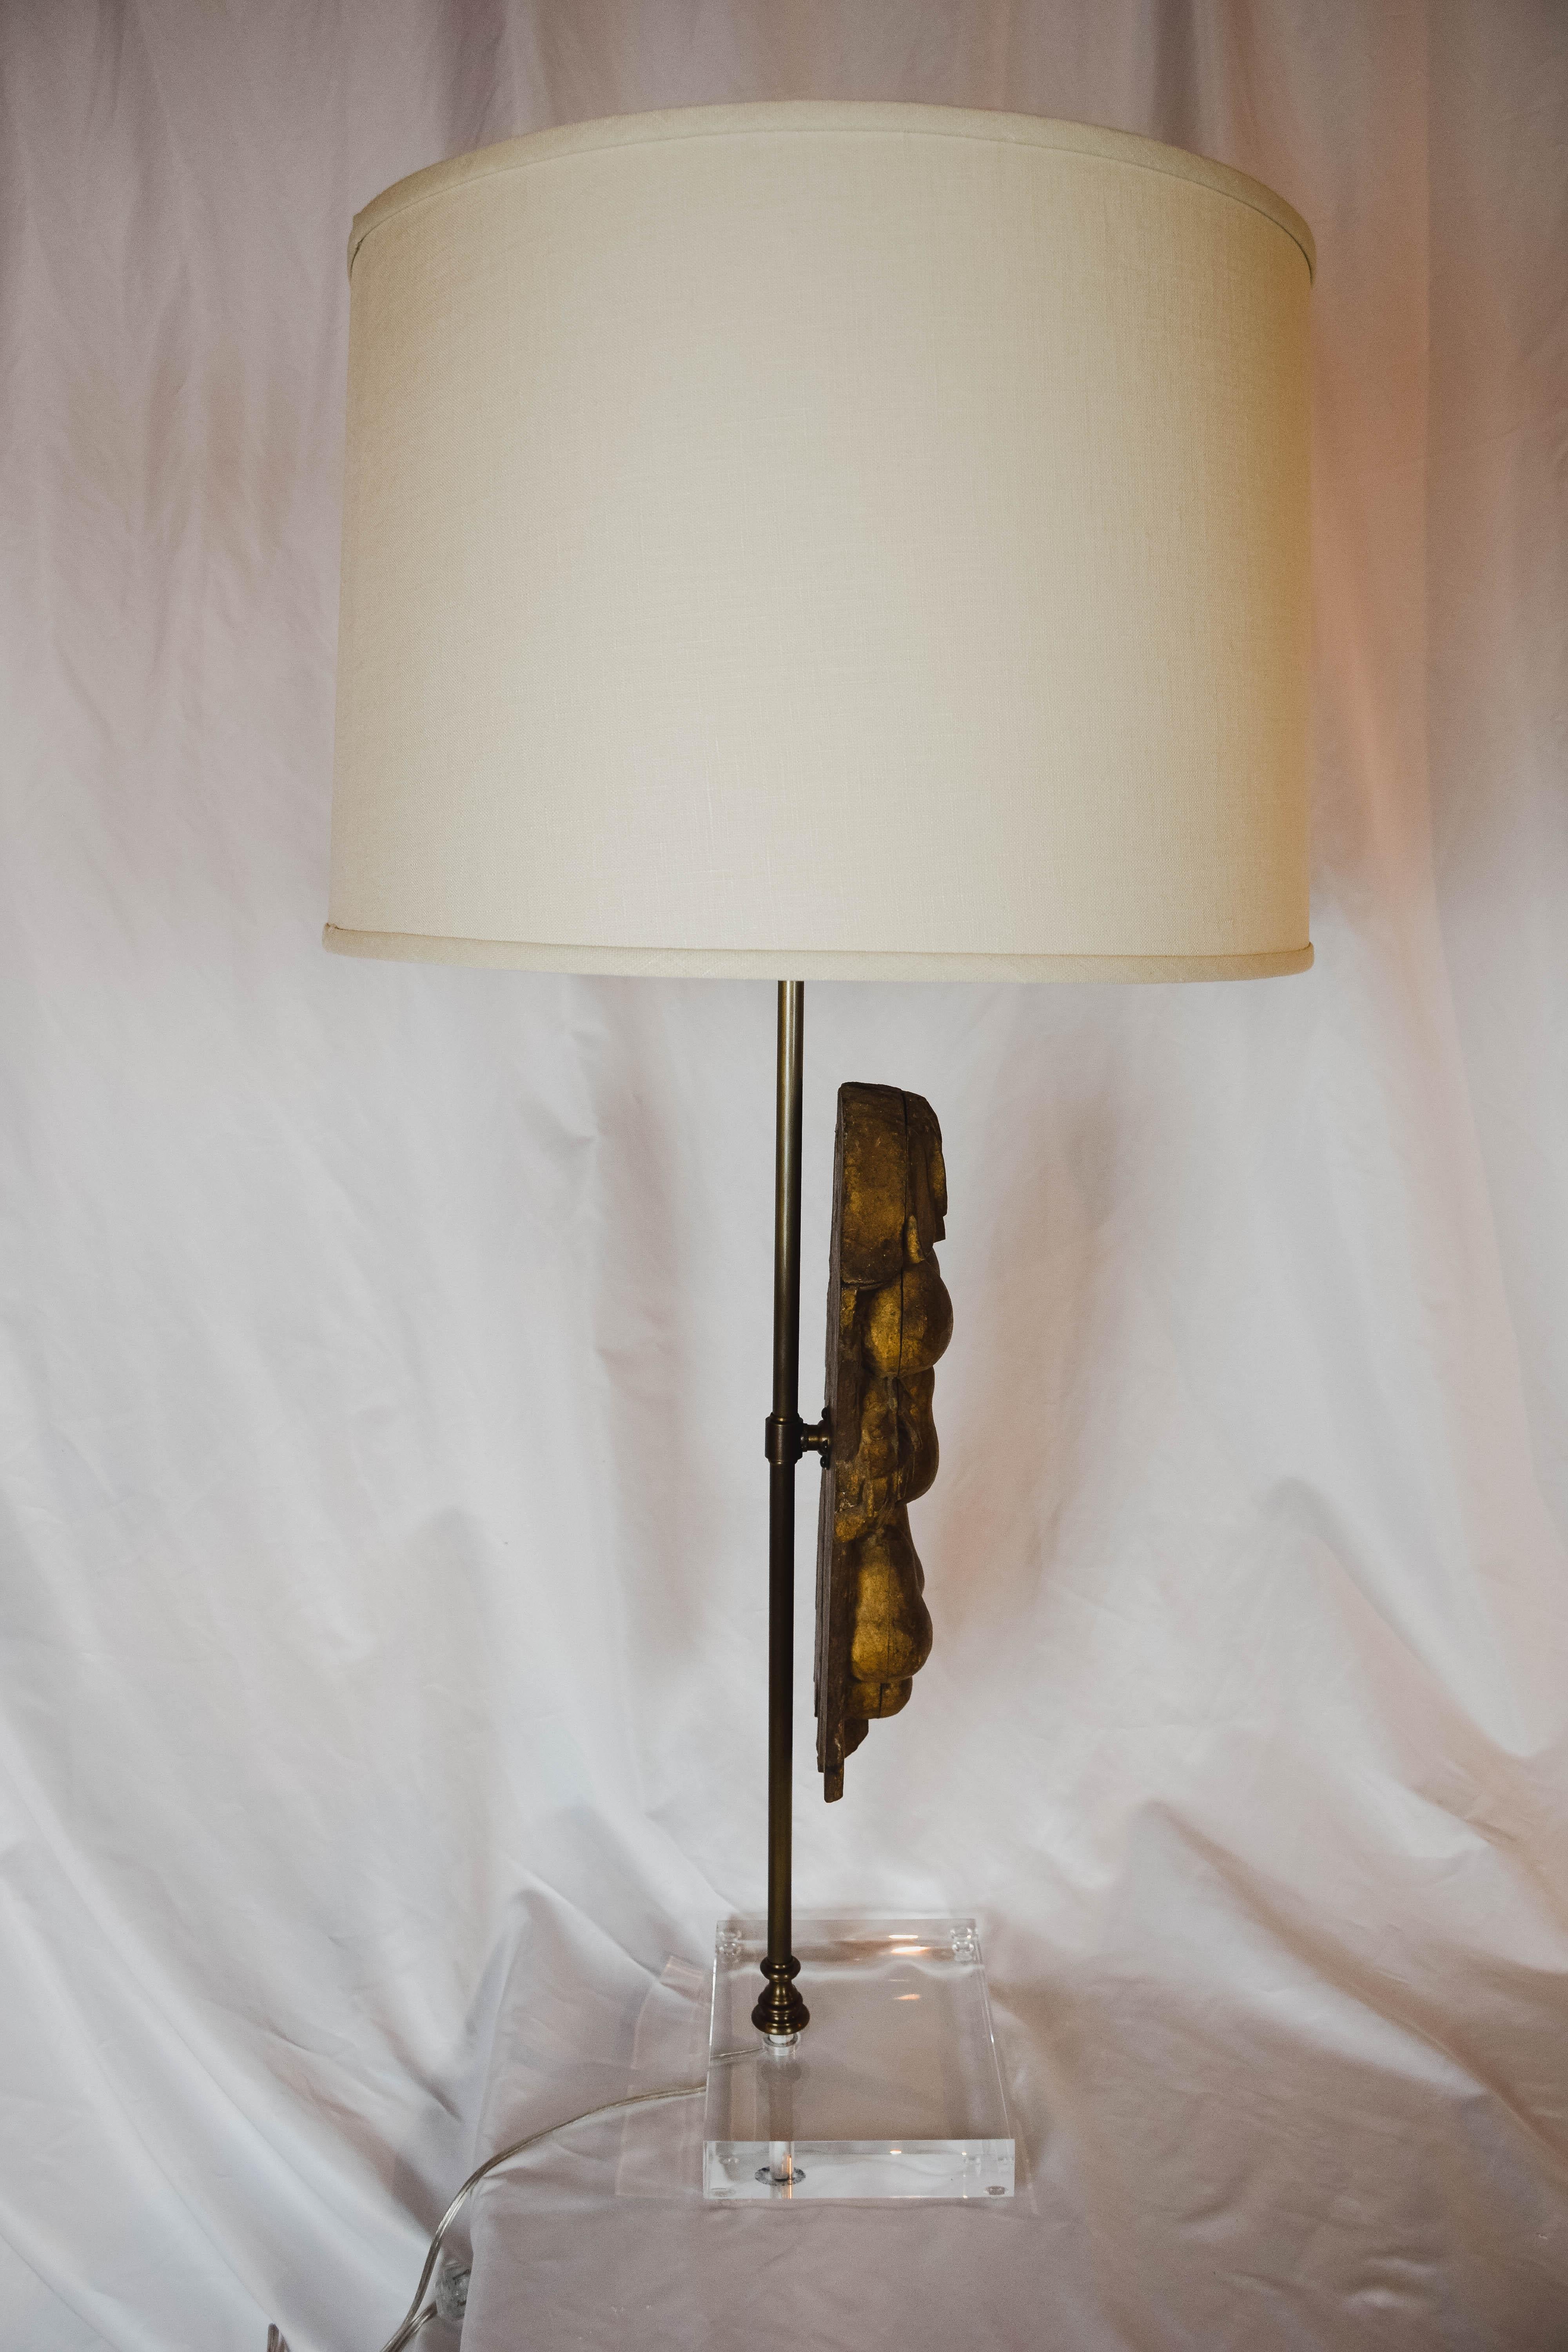 Lamp Designed with Antique Portuguese Architectural Element 1